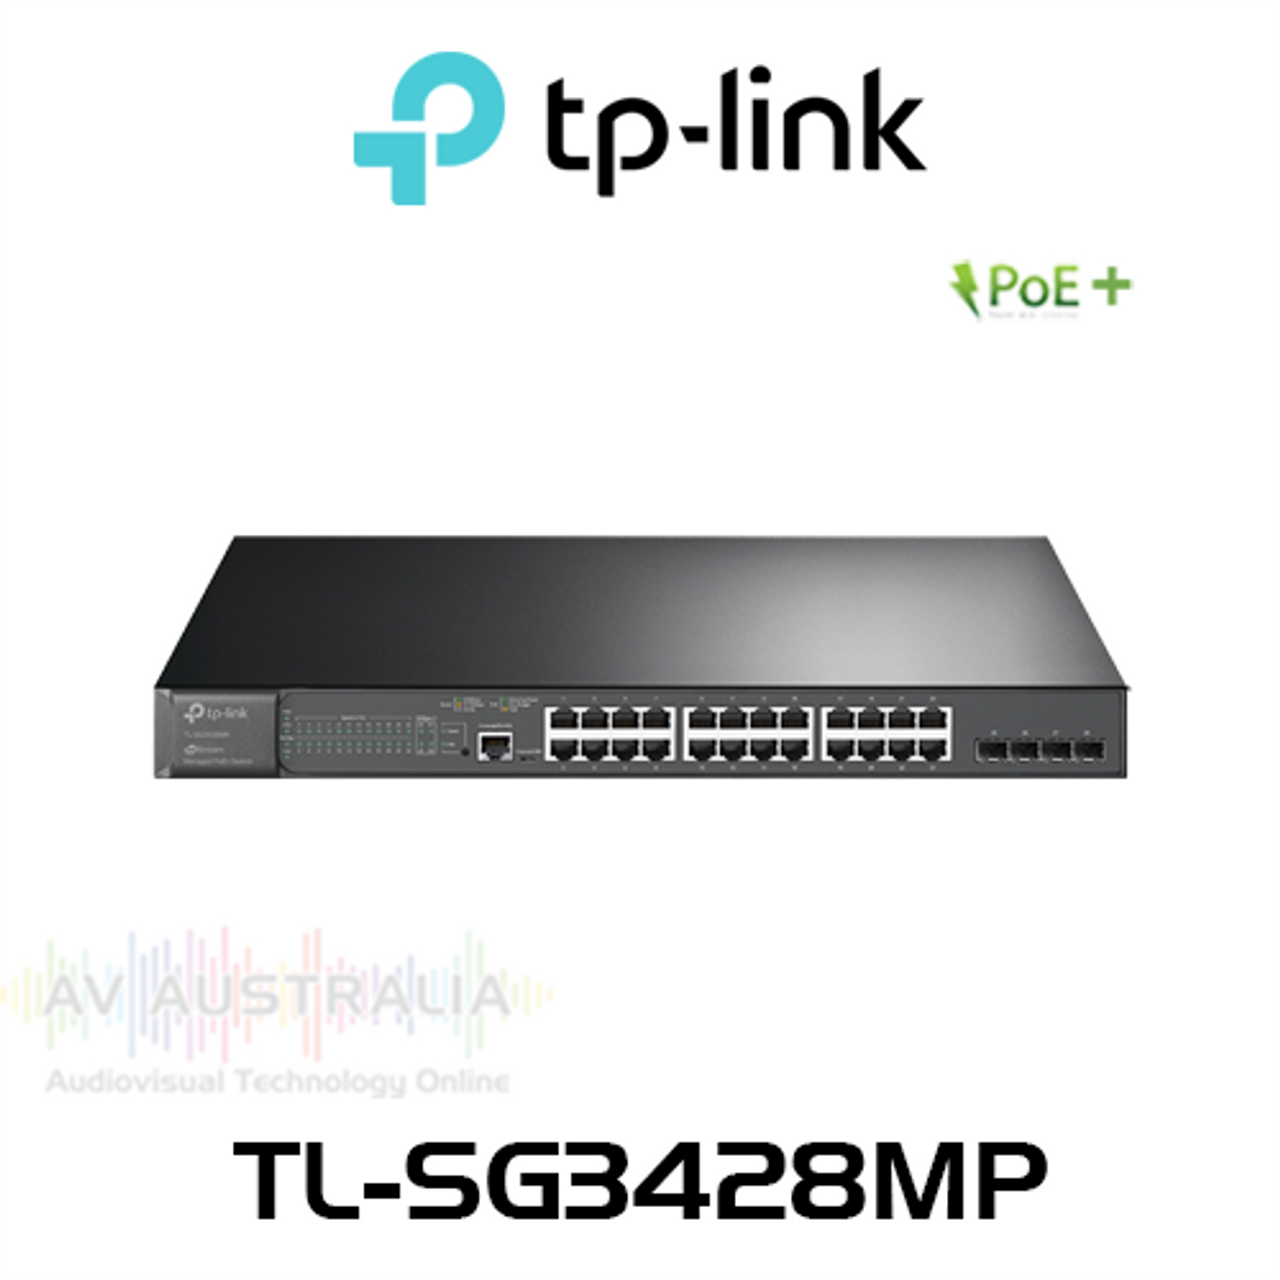 TP-Link TL-SG3428MP Jetstream 24-Port Gigabit PoE+ L2 Managed Switch With 4 SFP Slots